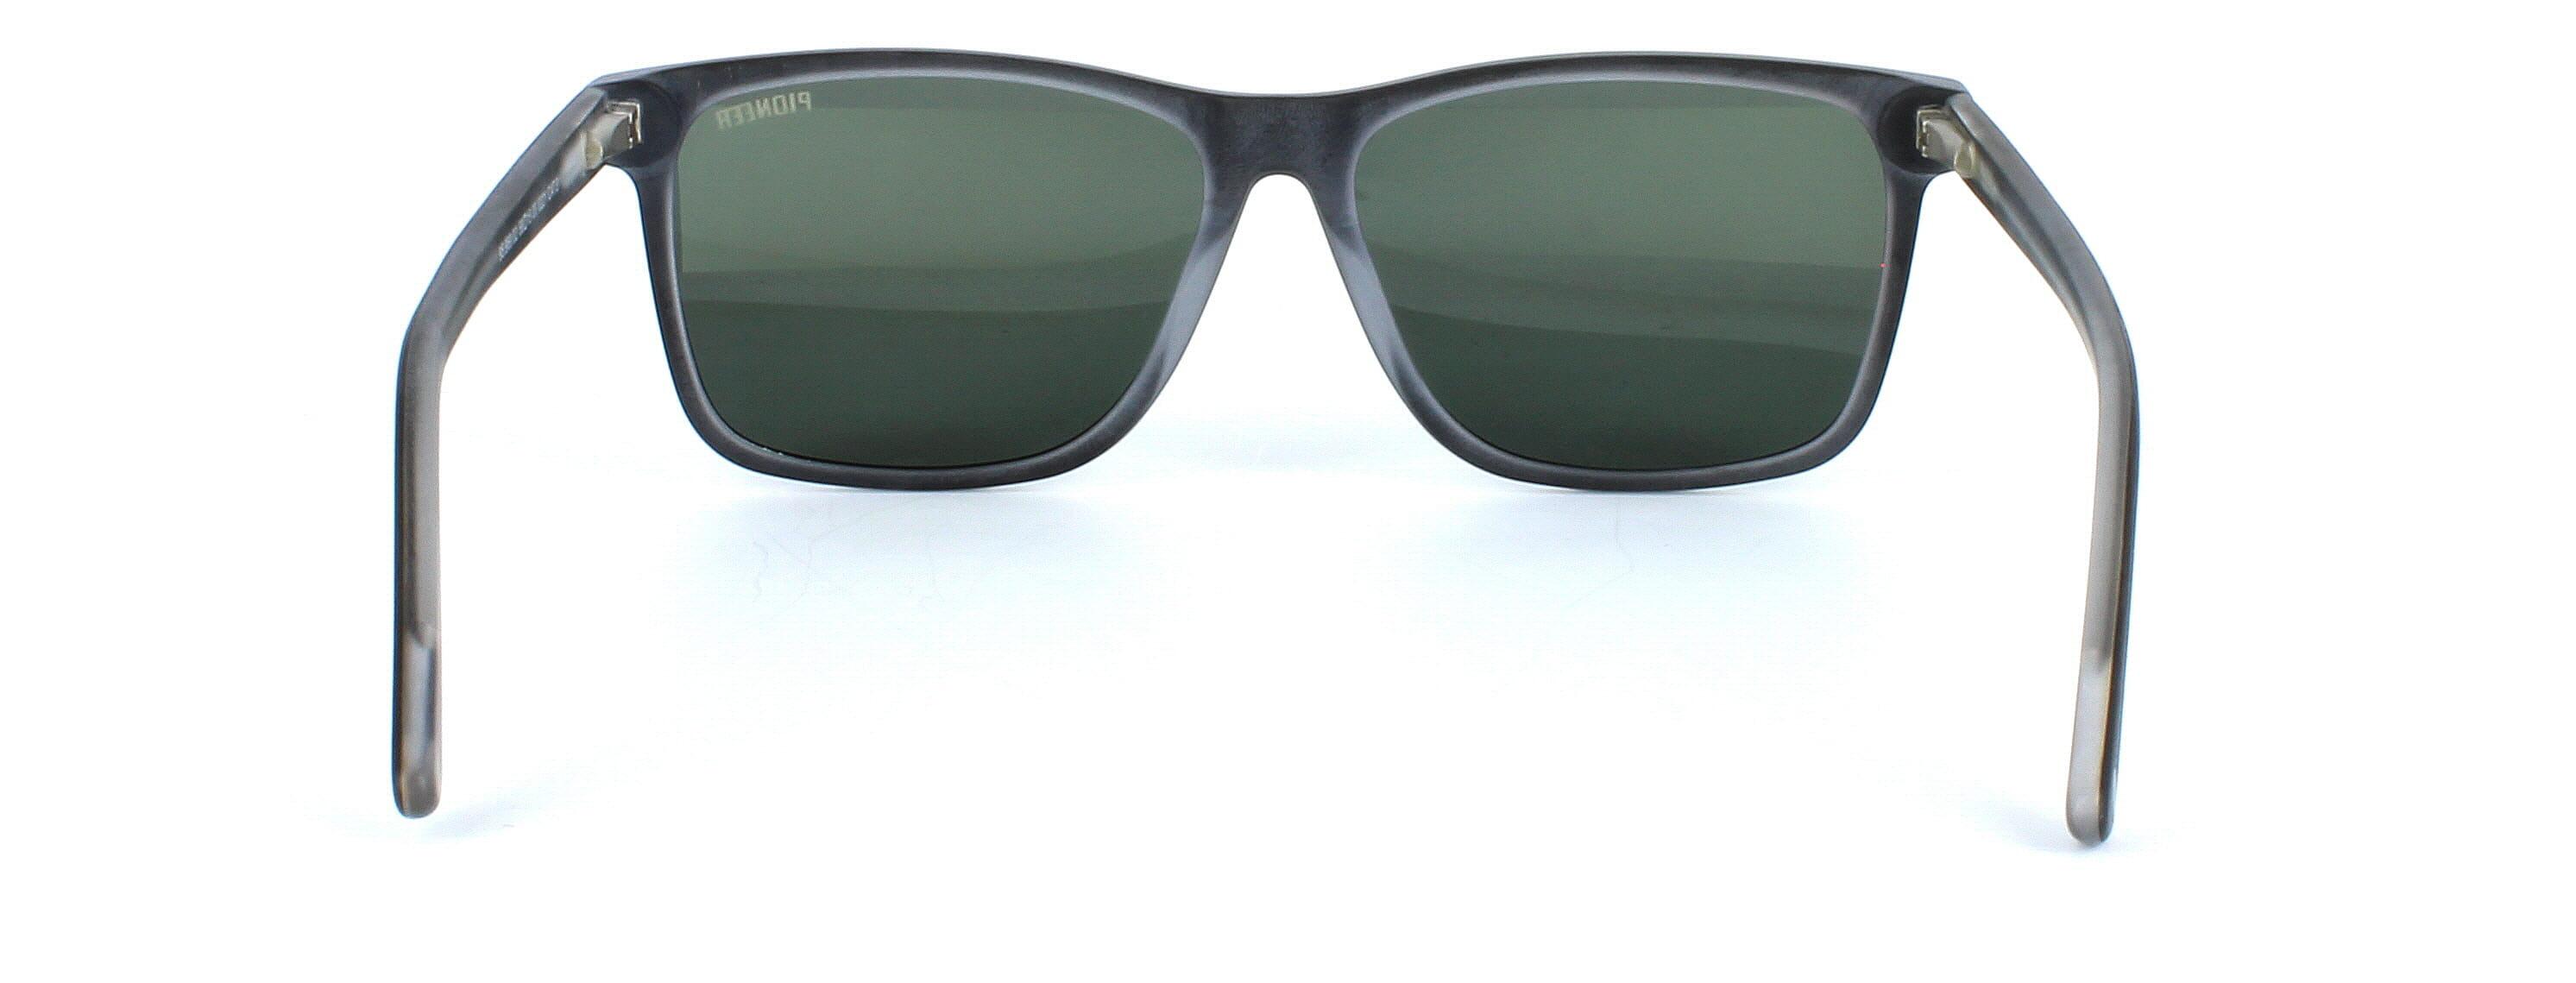 Angelo - unisex plastic sunglasses here in matt brown - image view 3